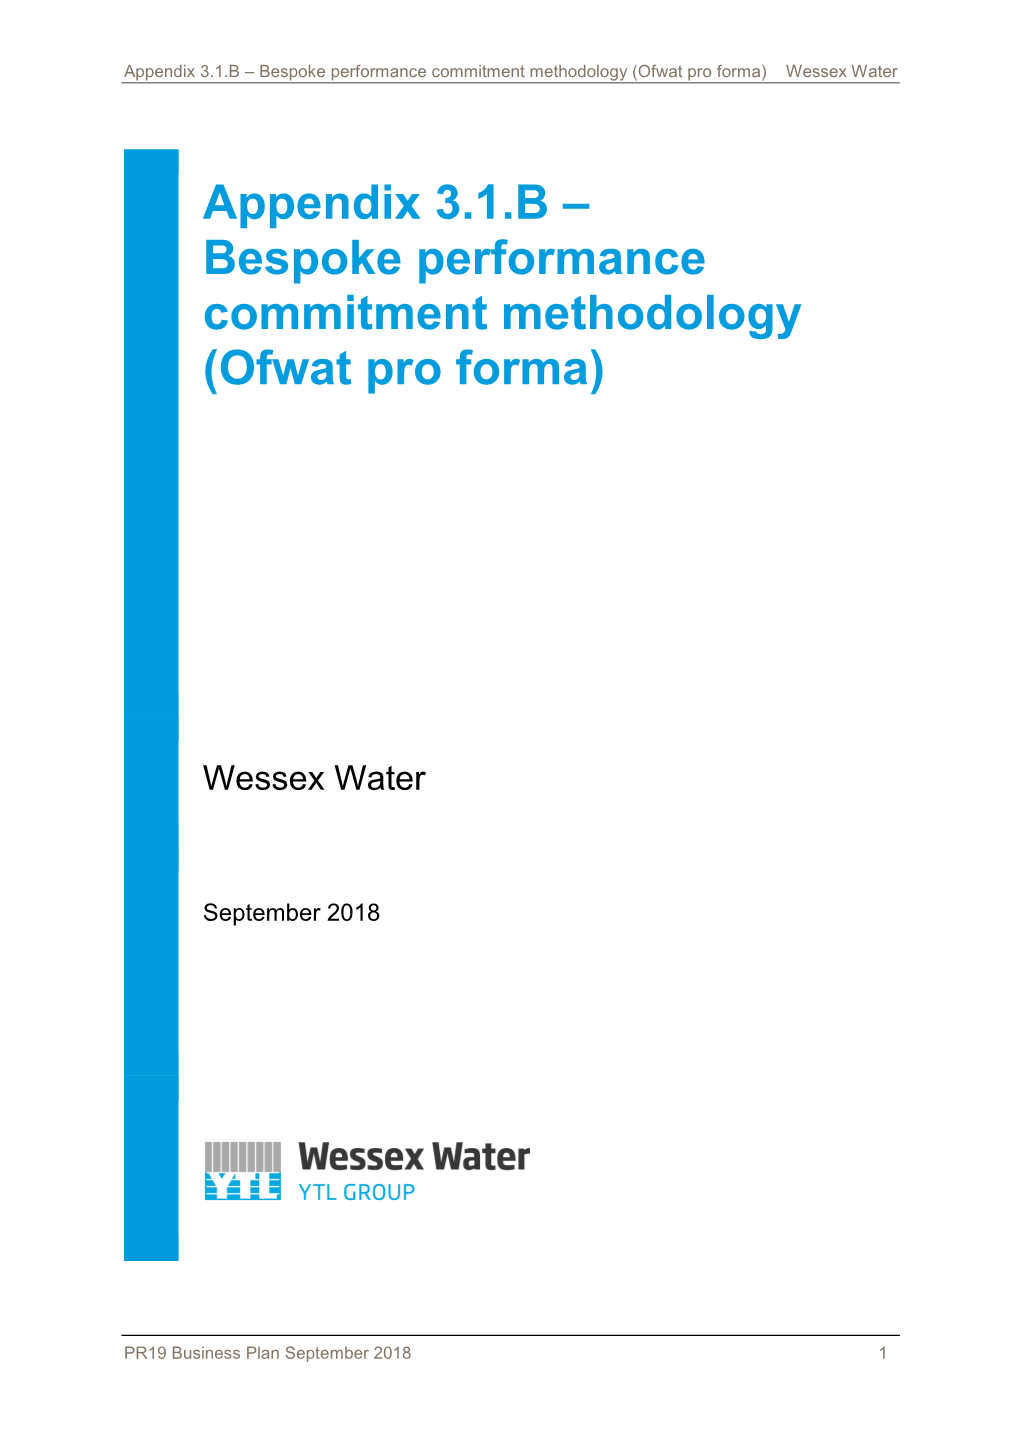 Bespoke Performance Commitment Methodology (Ofwat Pro Forma) Wessex Water